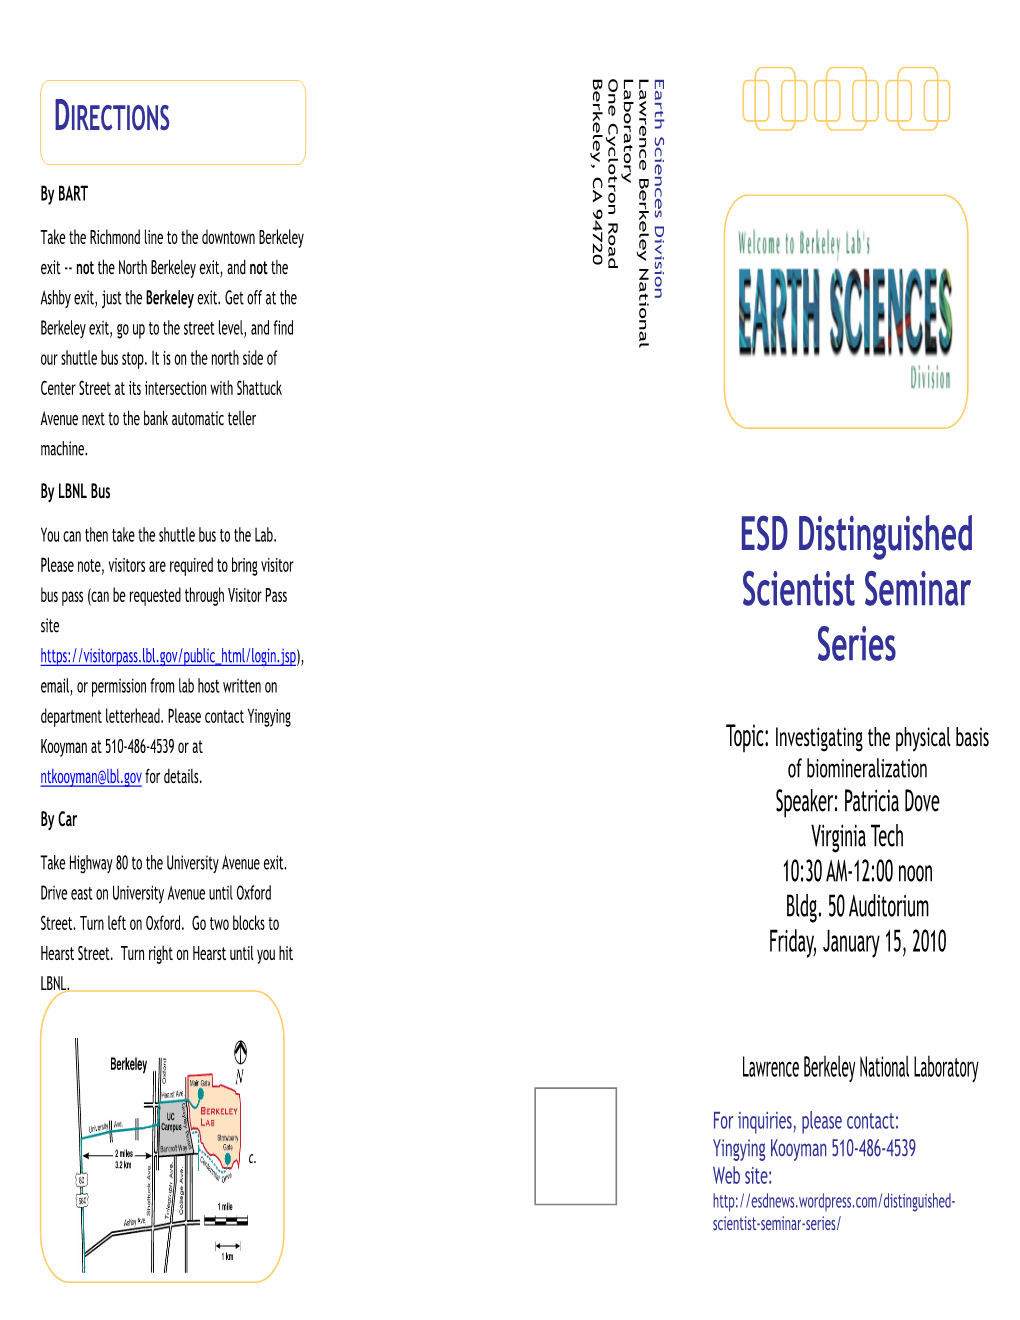 ESD Distinguished Scientist Seminar Series